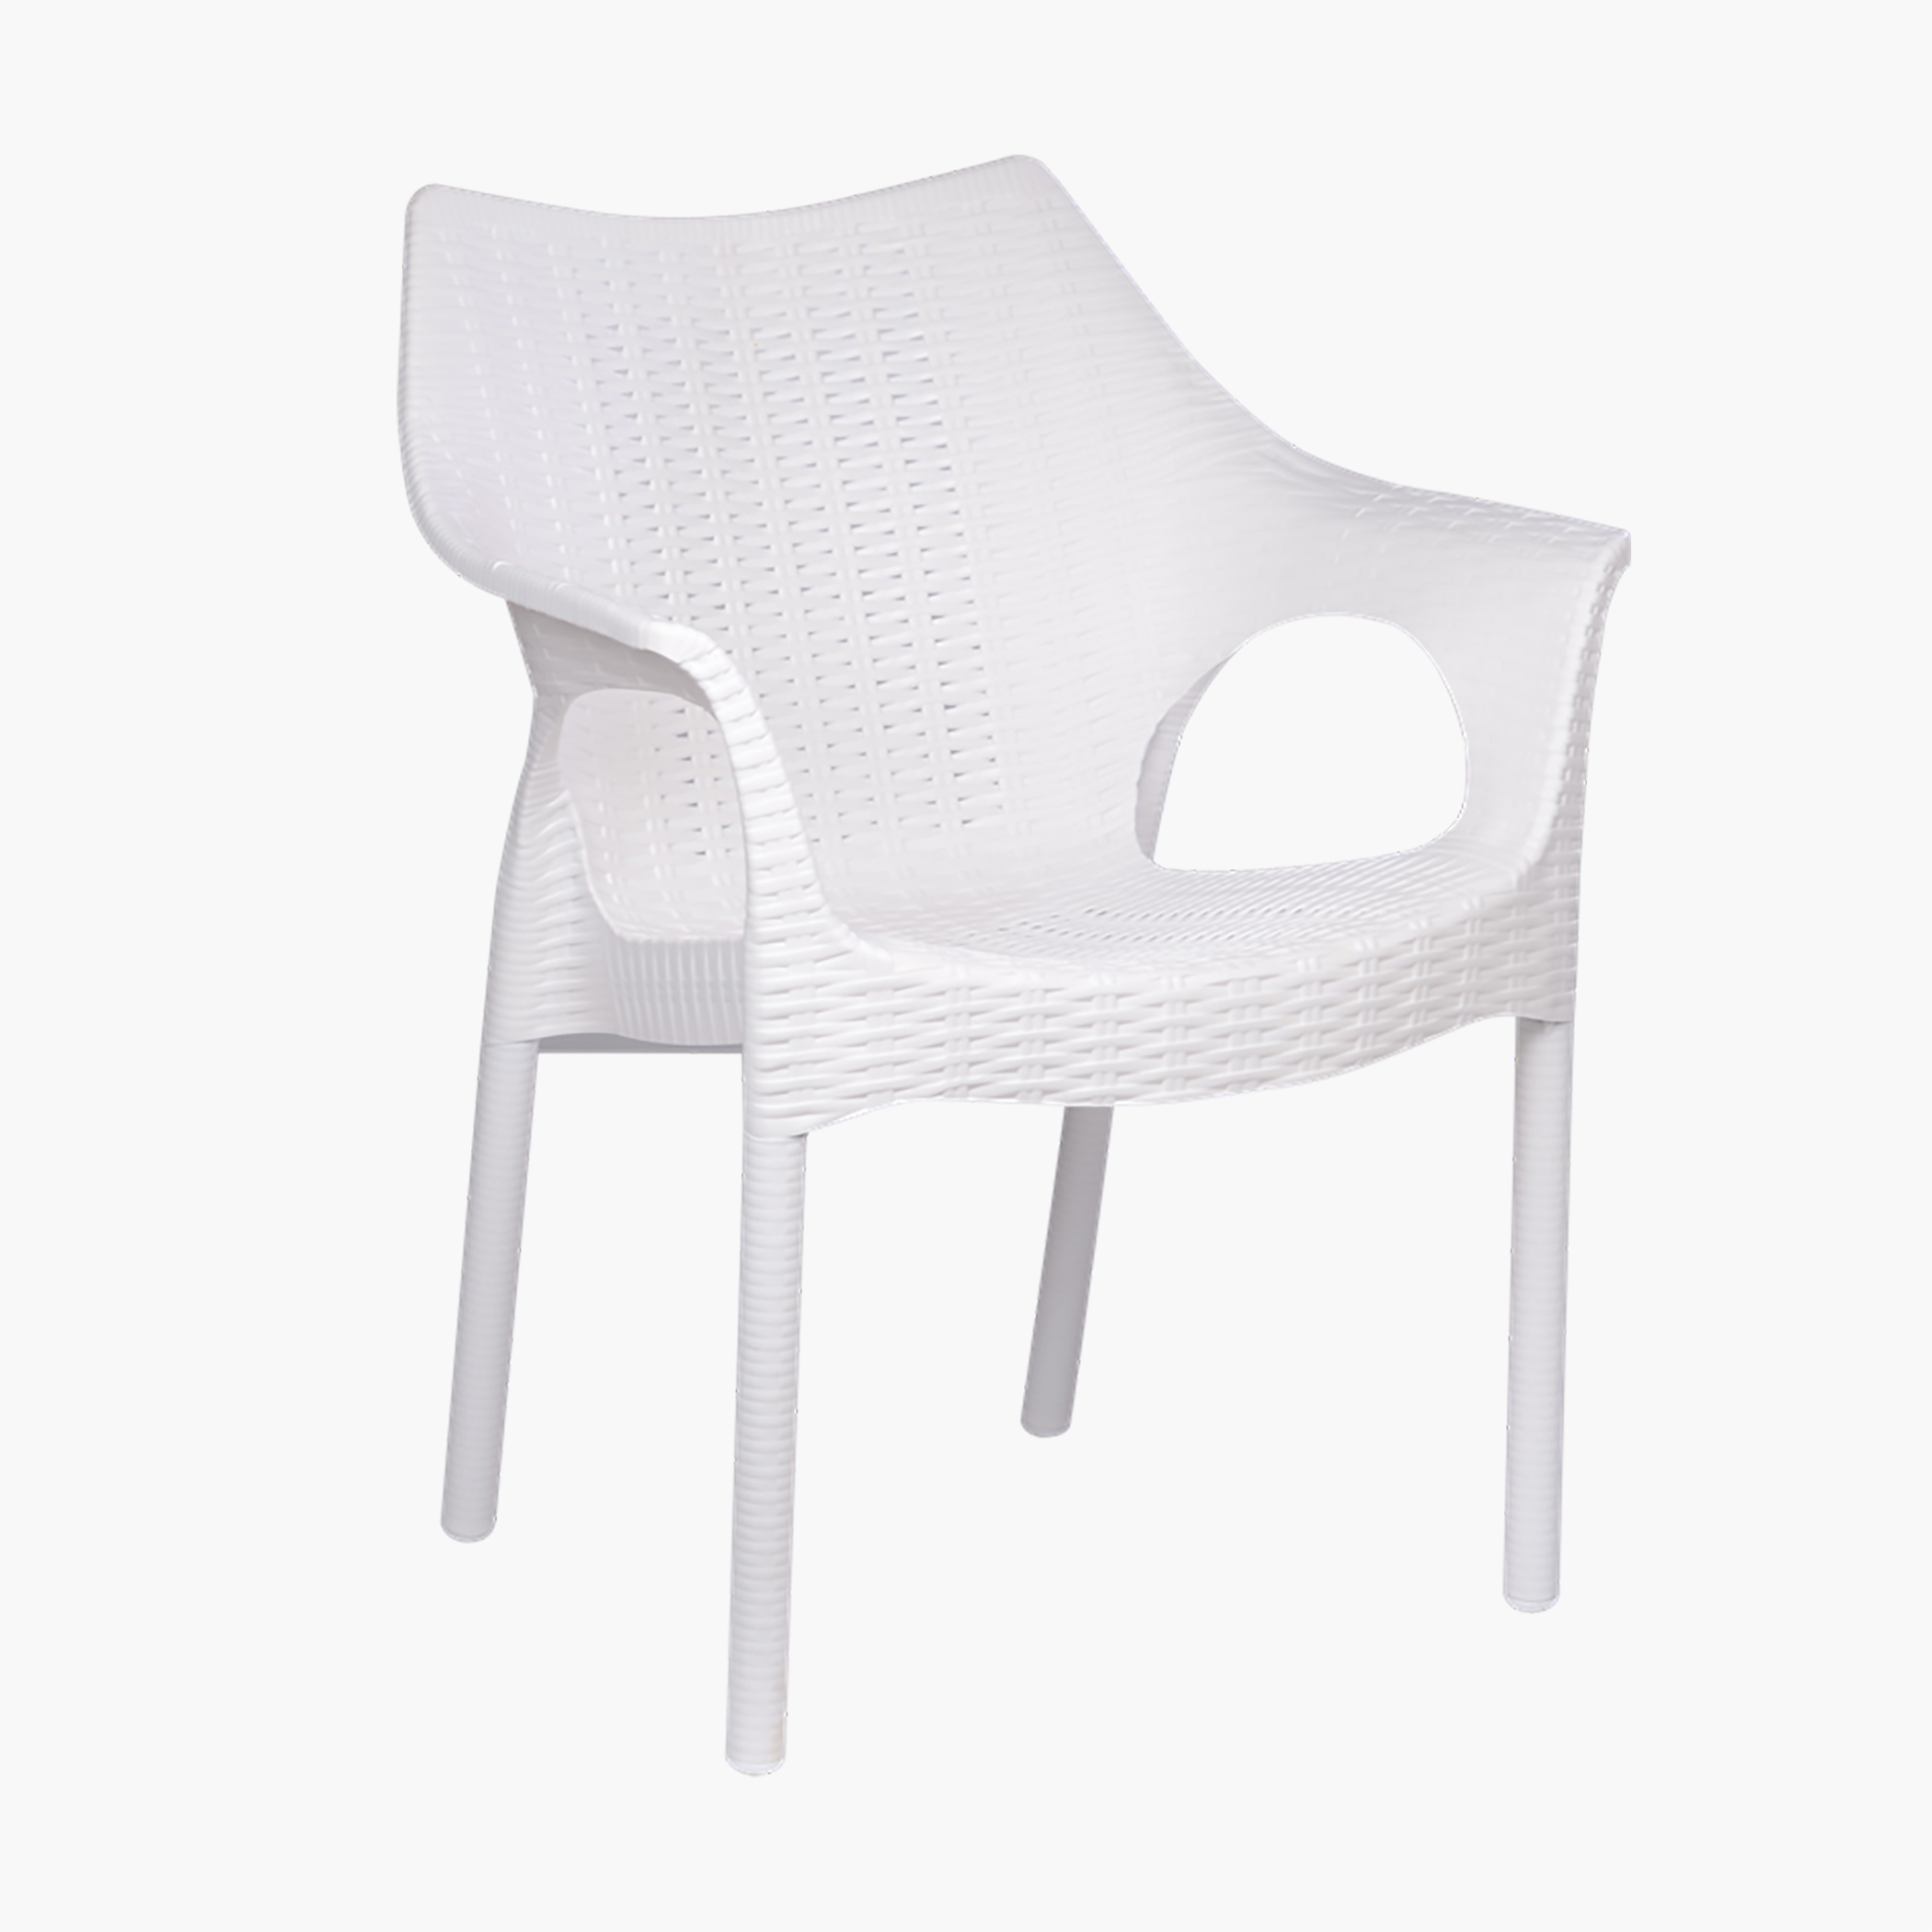 Abigail Polypropylene Outdoor Chair - White